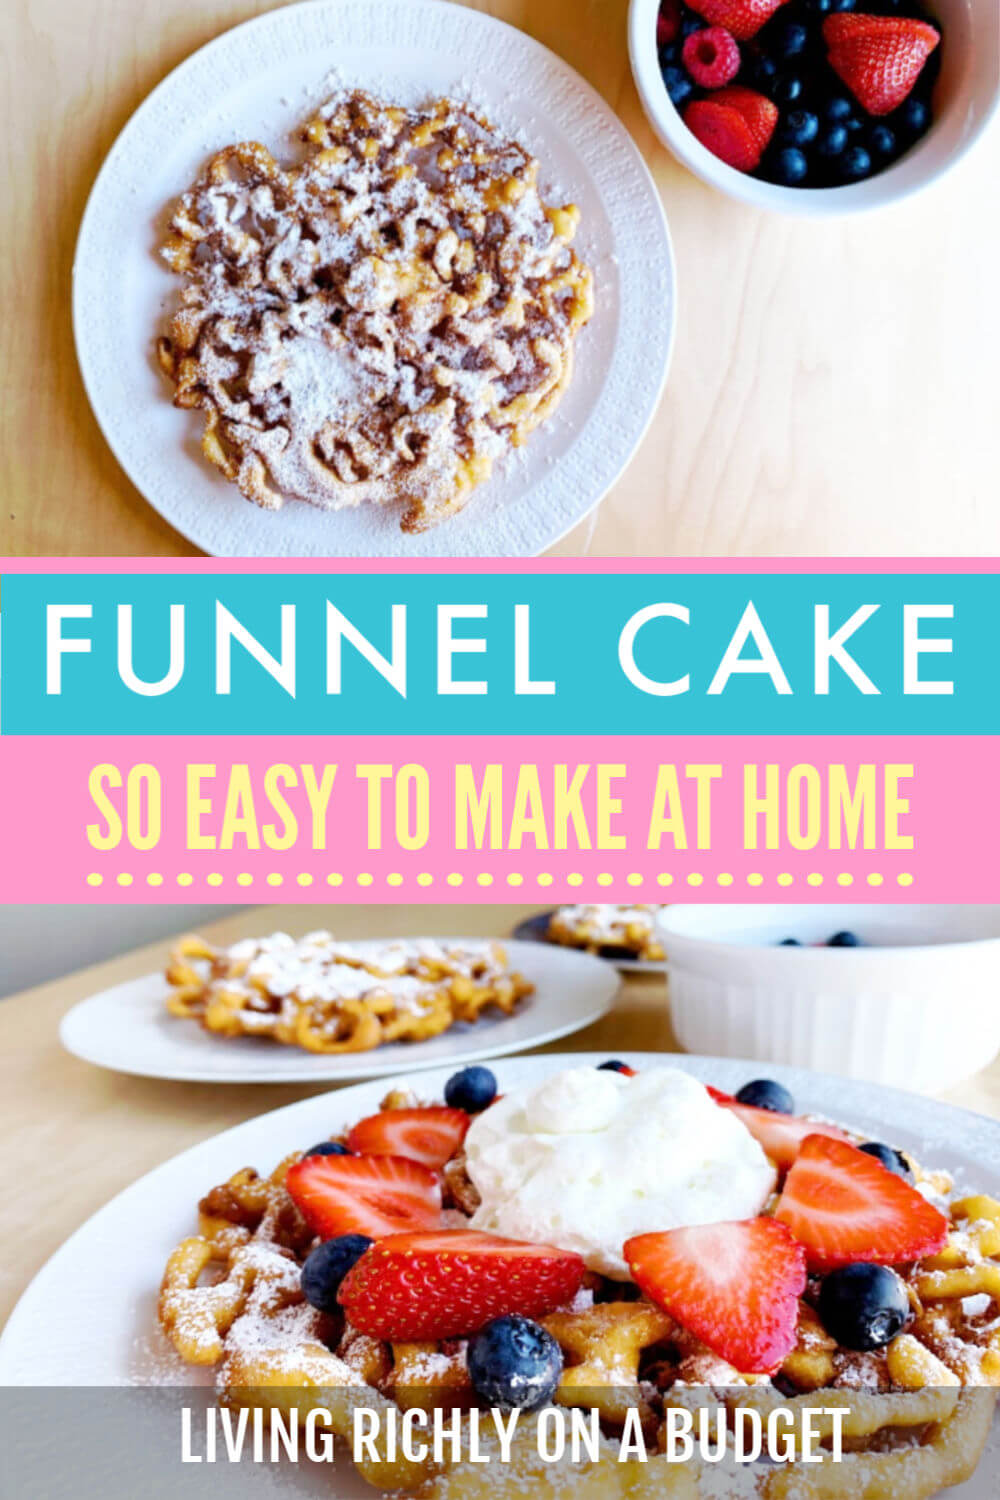 Easy Funnel Cake Recipe Image